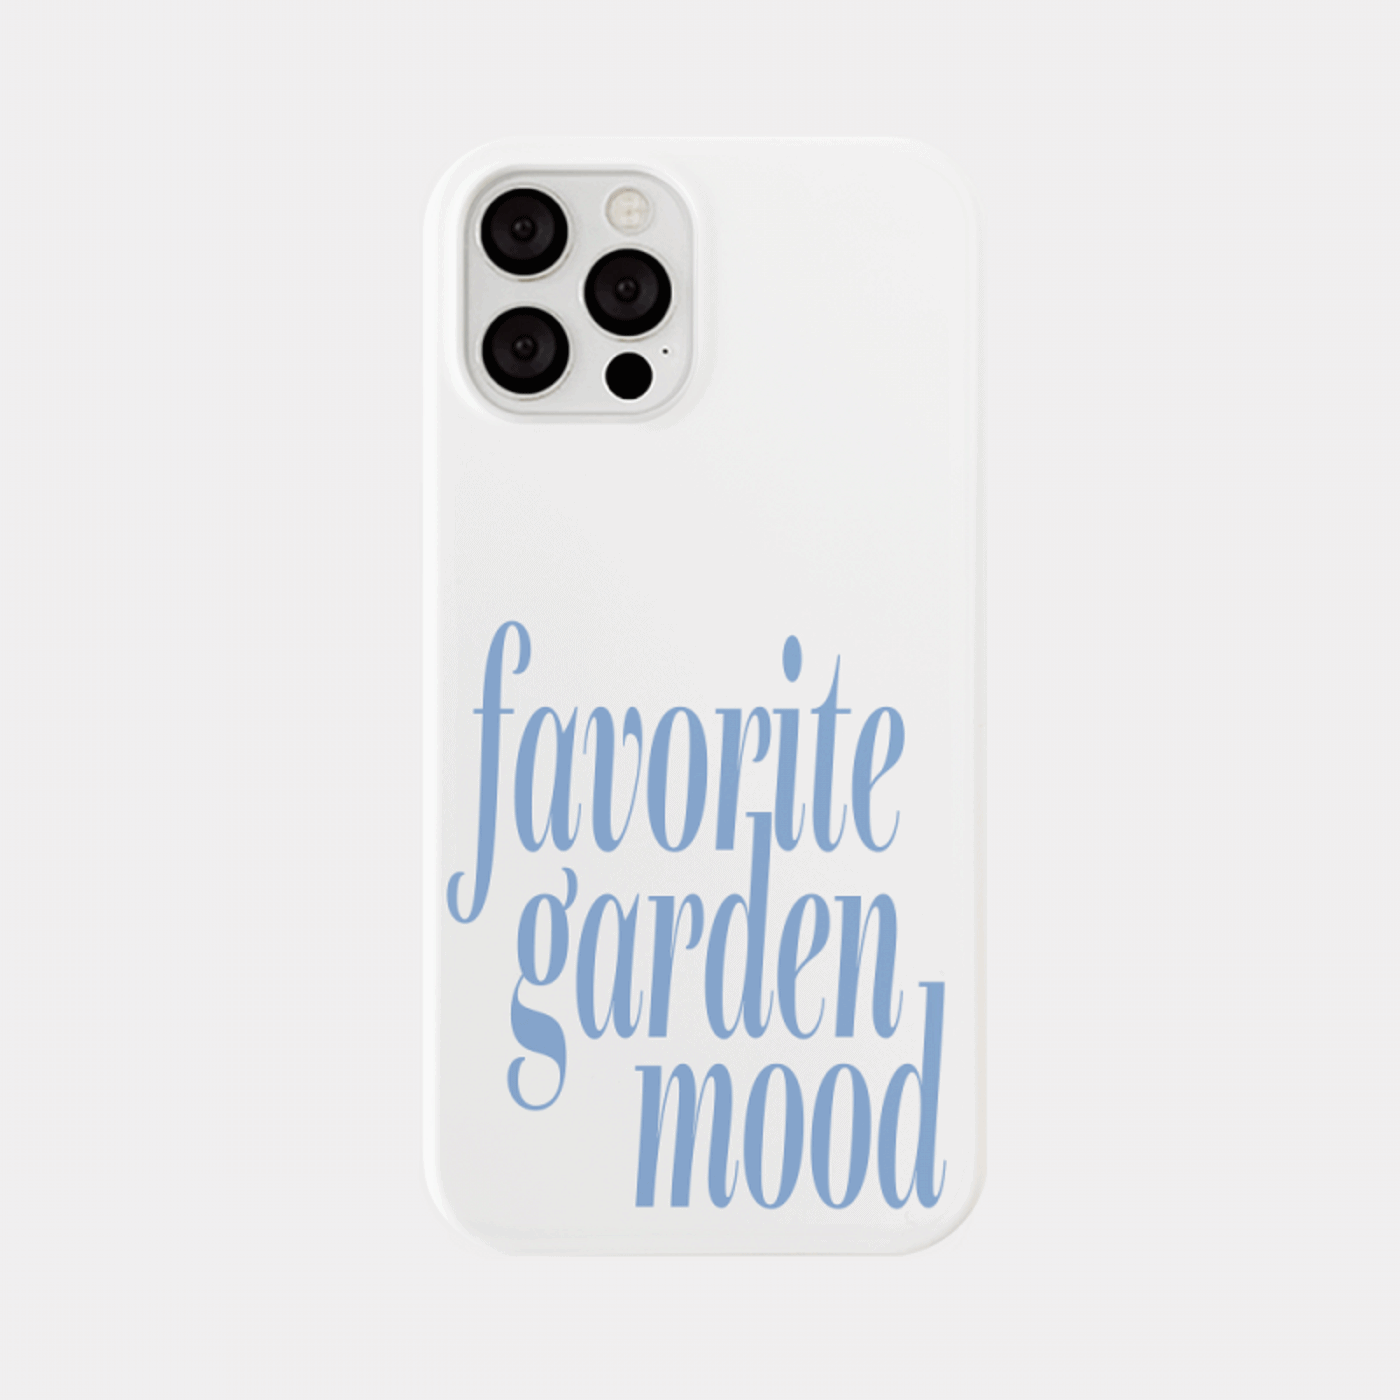 garden mood design [hard phone case]